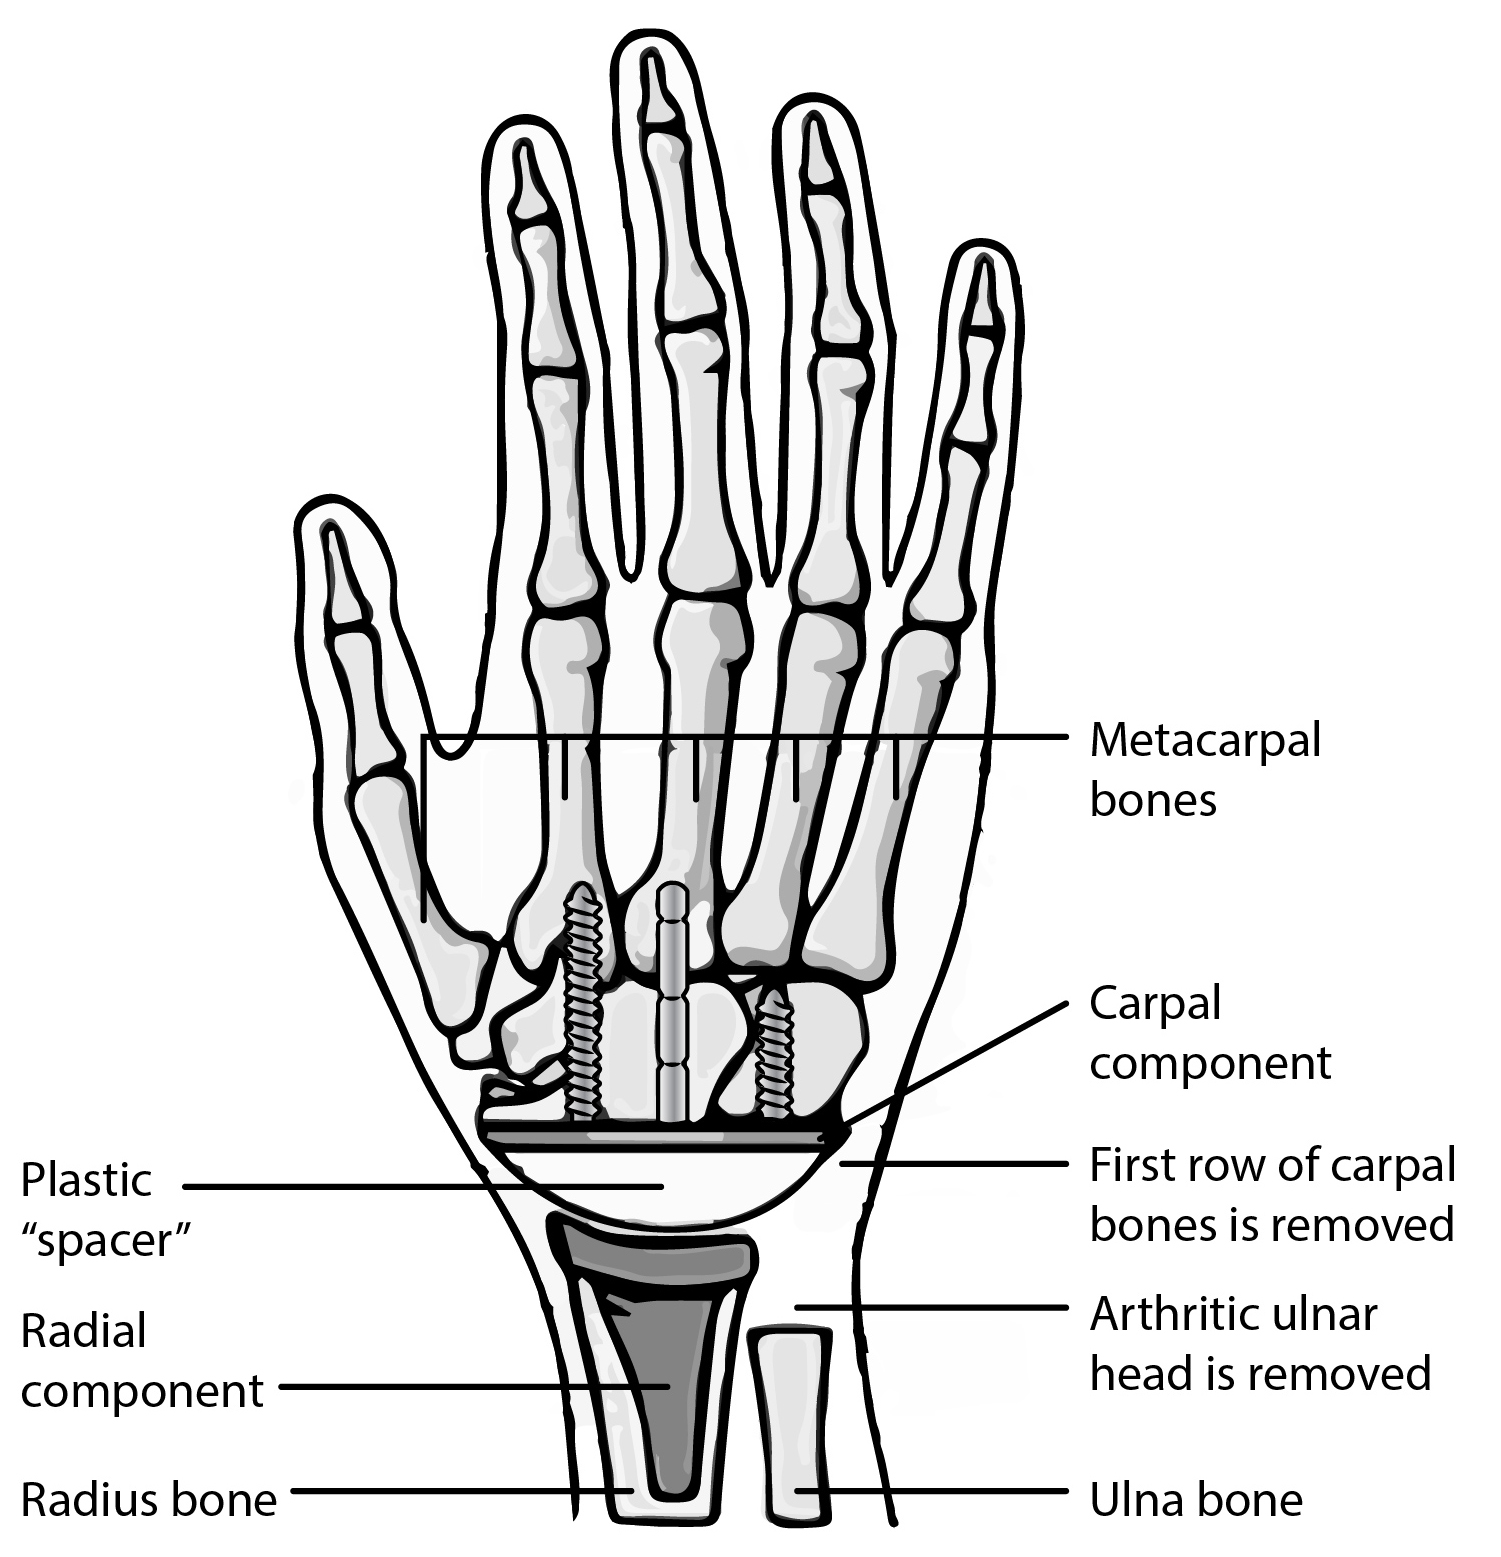 Components of a wrist arthroplasty